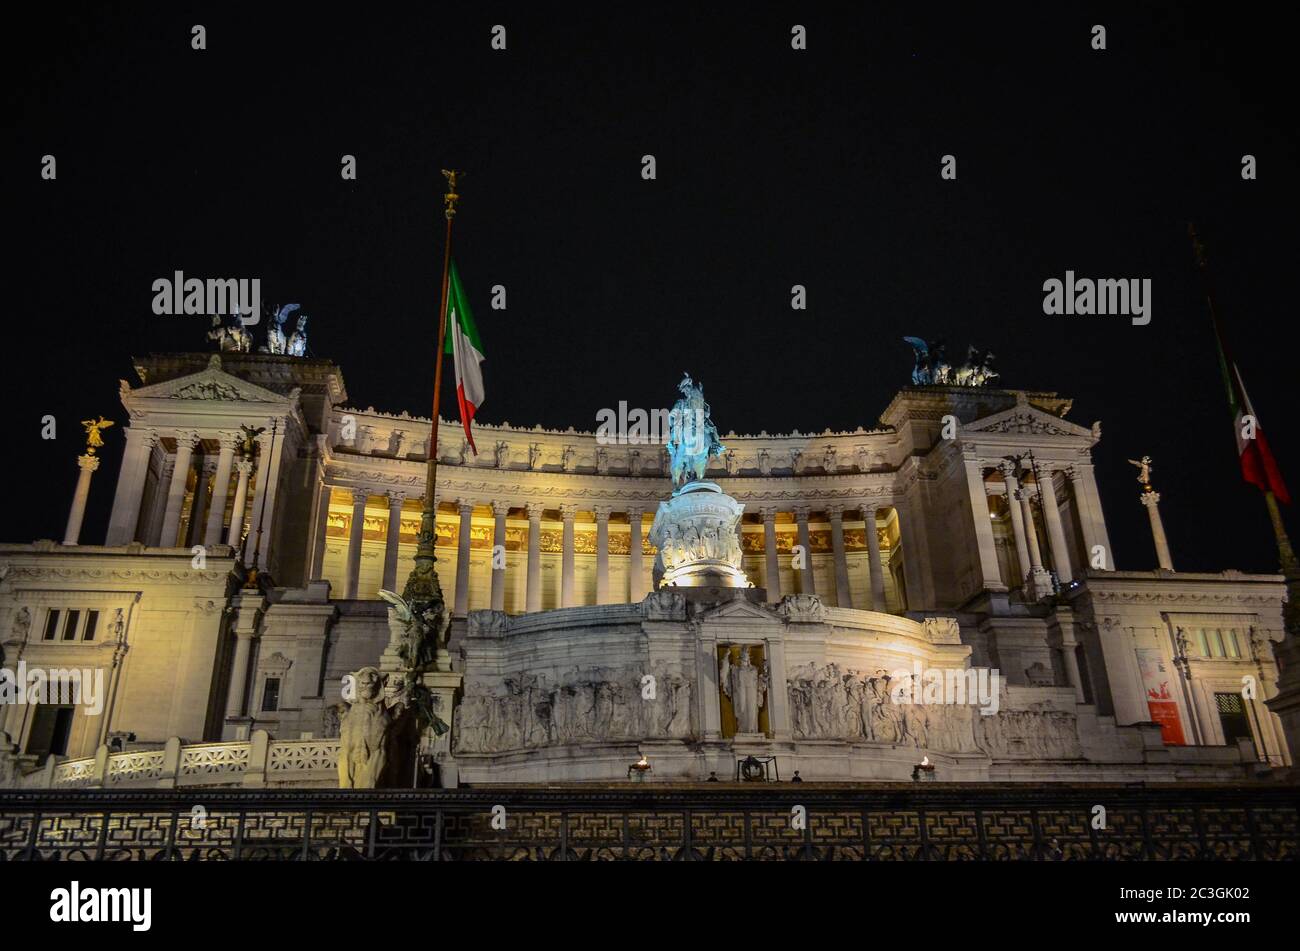 Night view of the monument to Victor Emmanuel II in Rome, Italy - Vittoriano, also known as Altare della Patria Stock Photo